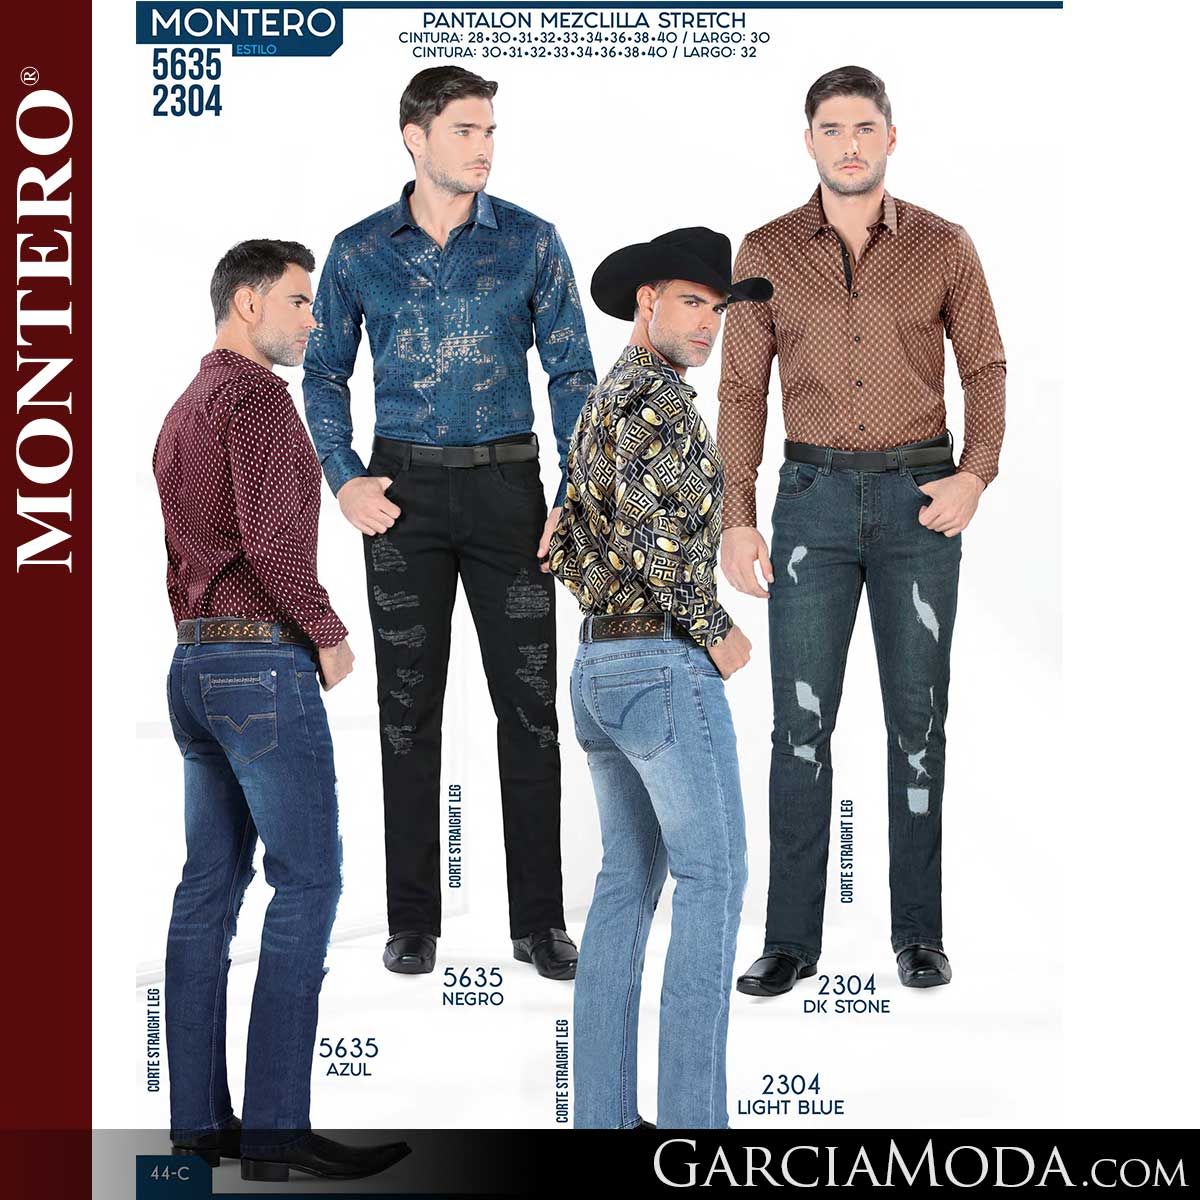 https://www.garciamoda.com/pub/media/catalog/product/cache/91d81cb5ab085a0c54e8dc332887b8c6/r/o/ropa-vaquera-pantalon-montero-5635-azul-negro-2304-dark-stone-light-blue.jpg